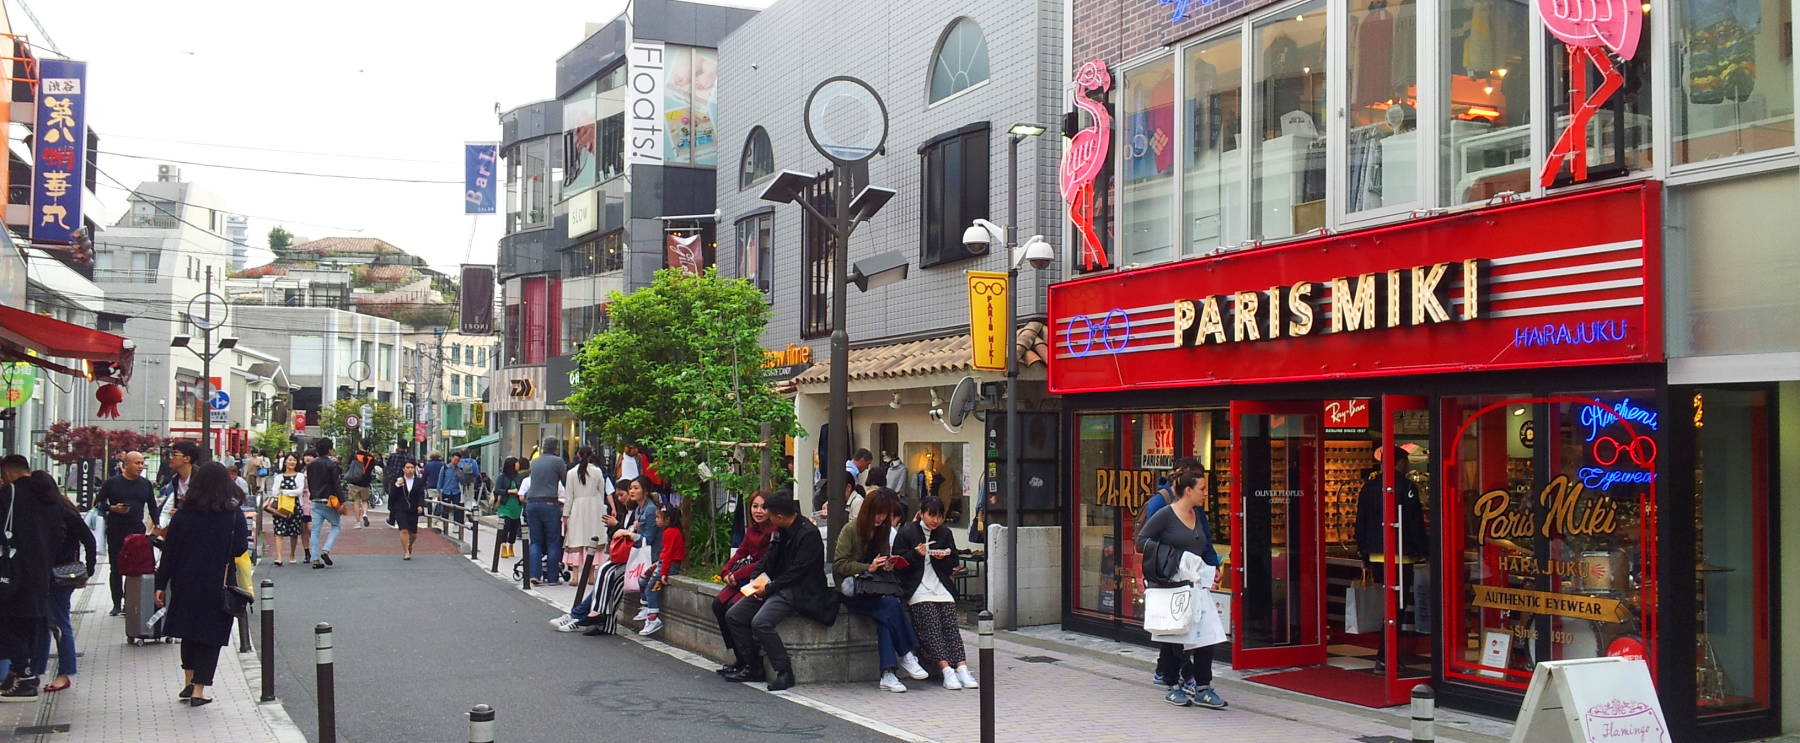 Trendy shops along Cat Street in the Harajuku district in Tōkyō.